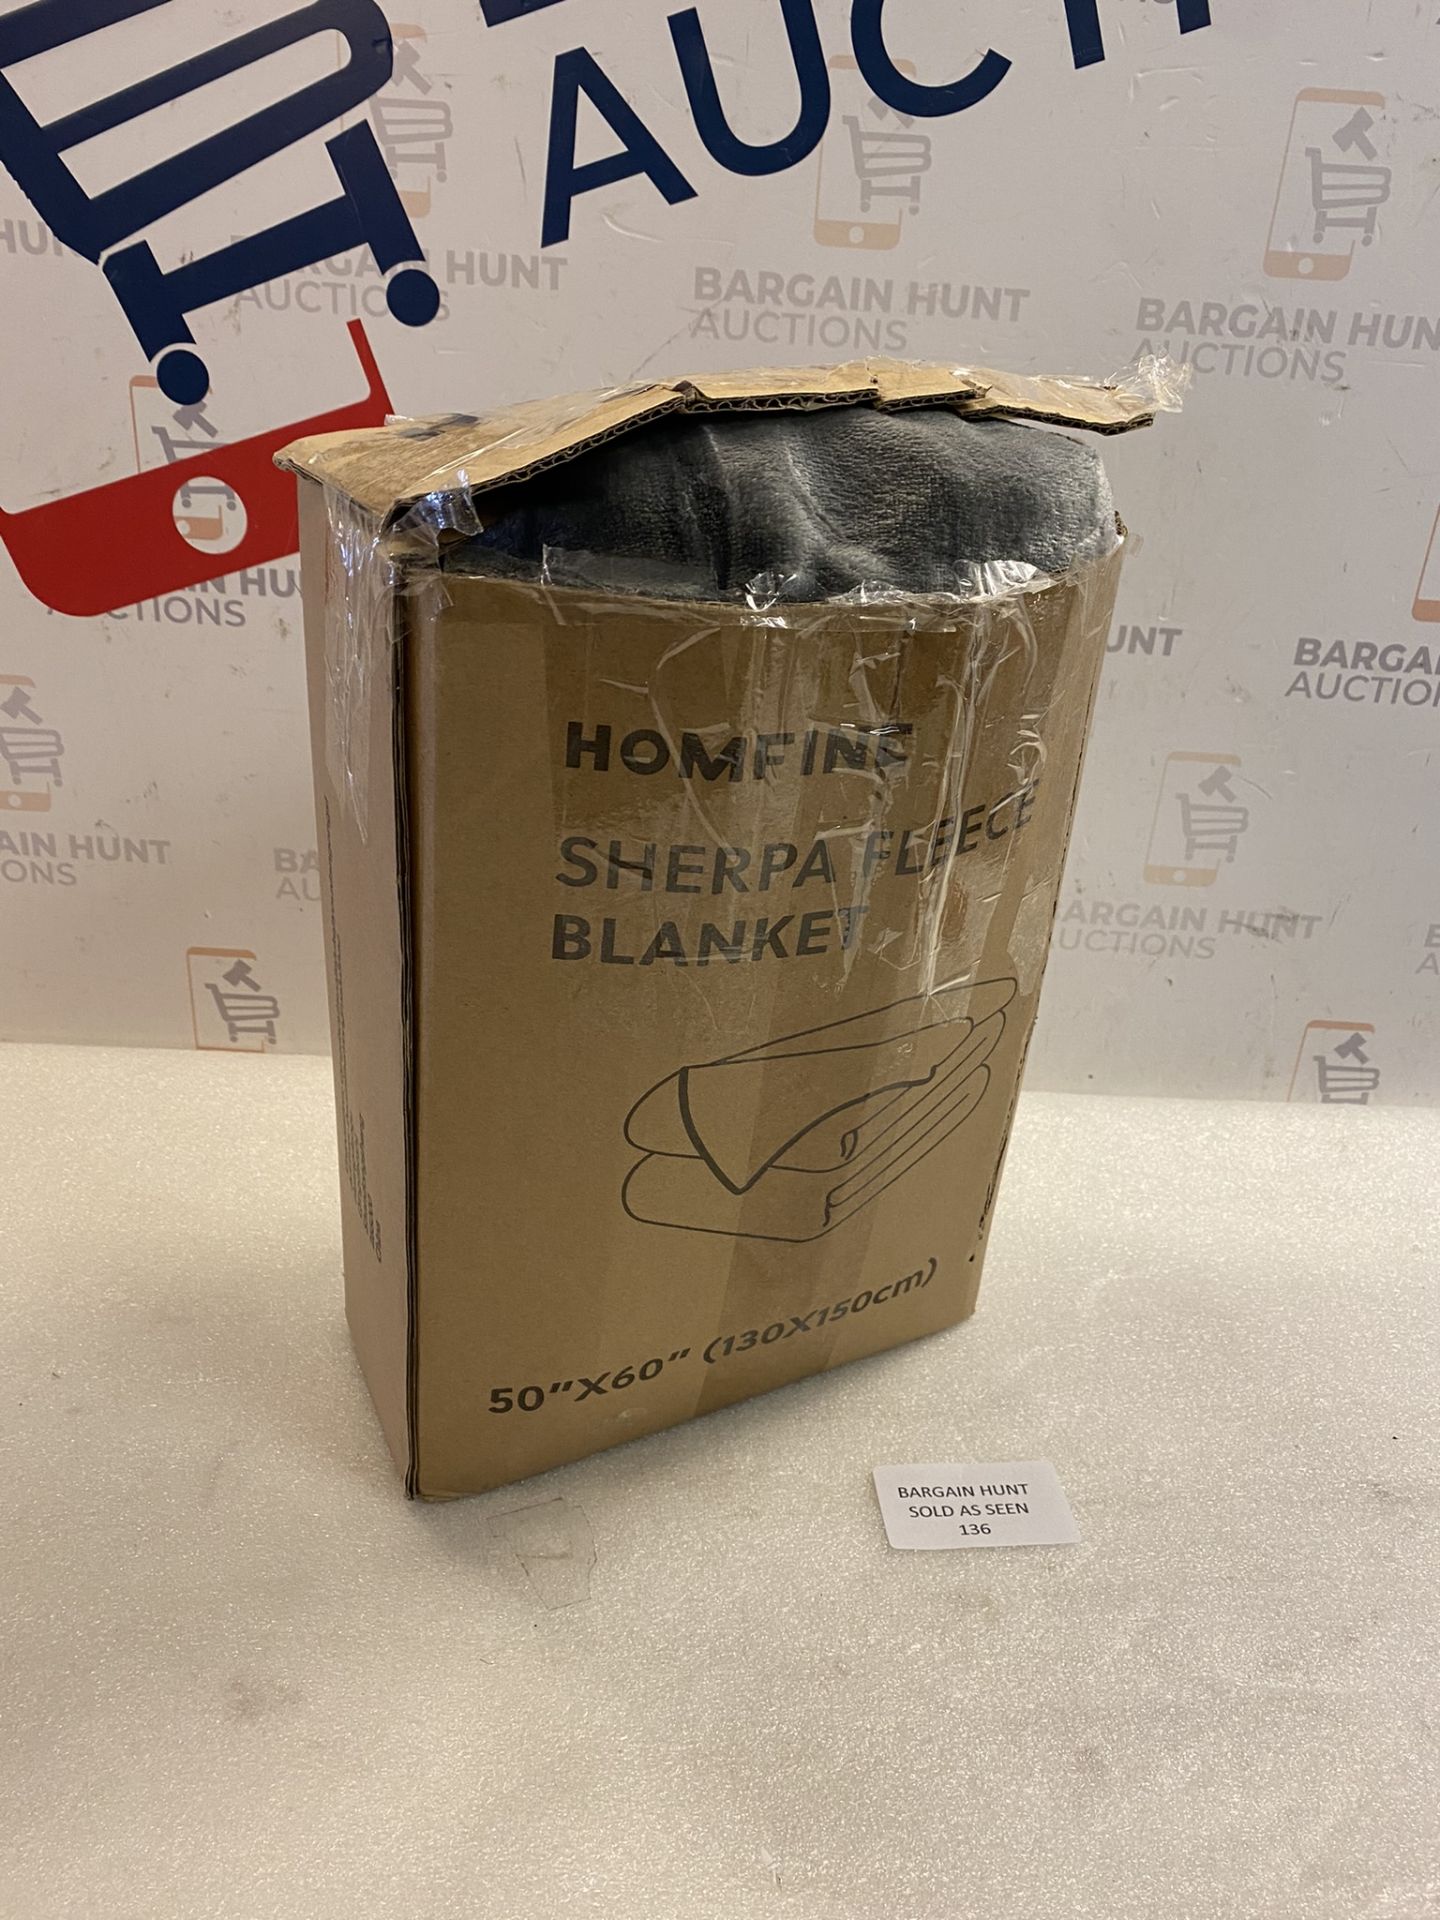 RRP £36.99 Homfine Sherpa Fleece Throw Blanket Super Soft Fluffy Reversible Throw, 130x150cm - Image 2 of 2